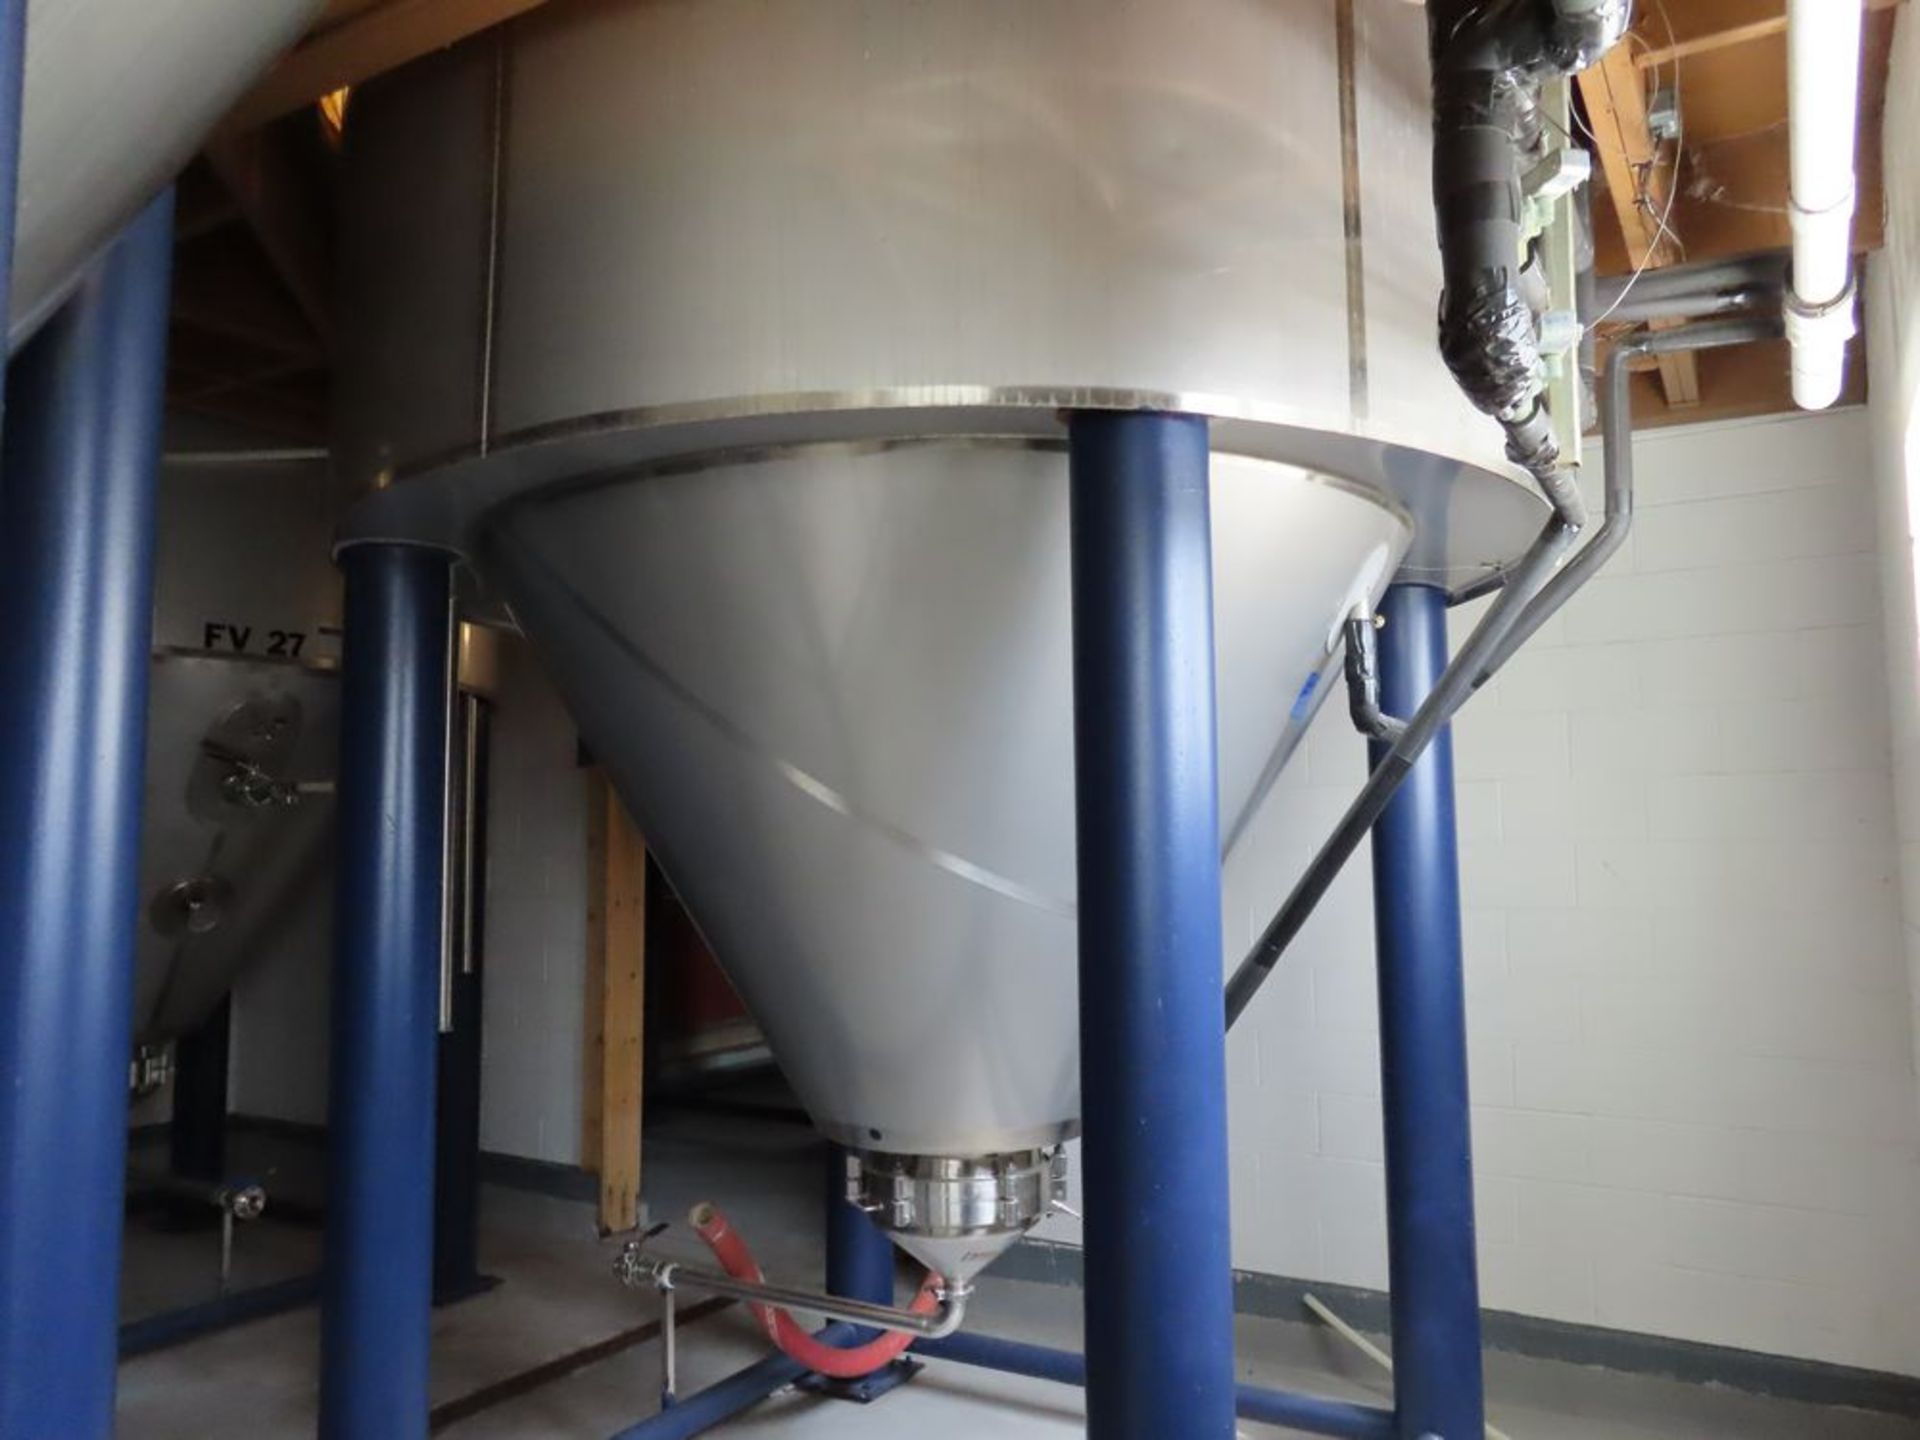 Mueller 300 BBL, Model F, Beer fermentor - Image 2 of 4